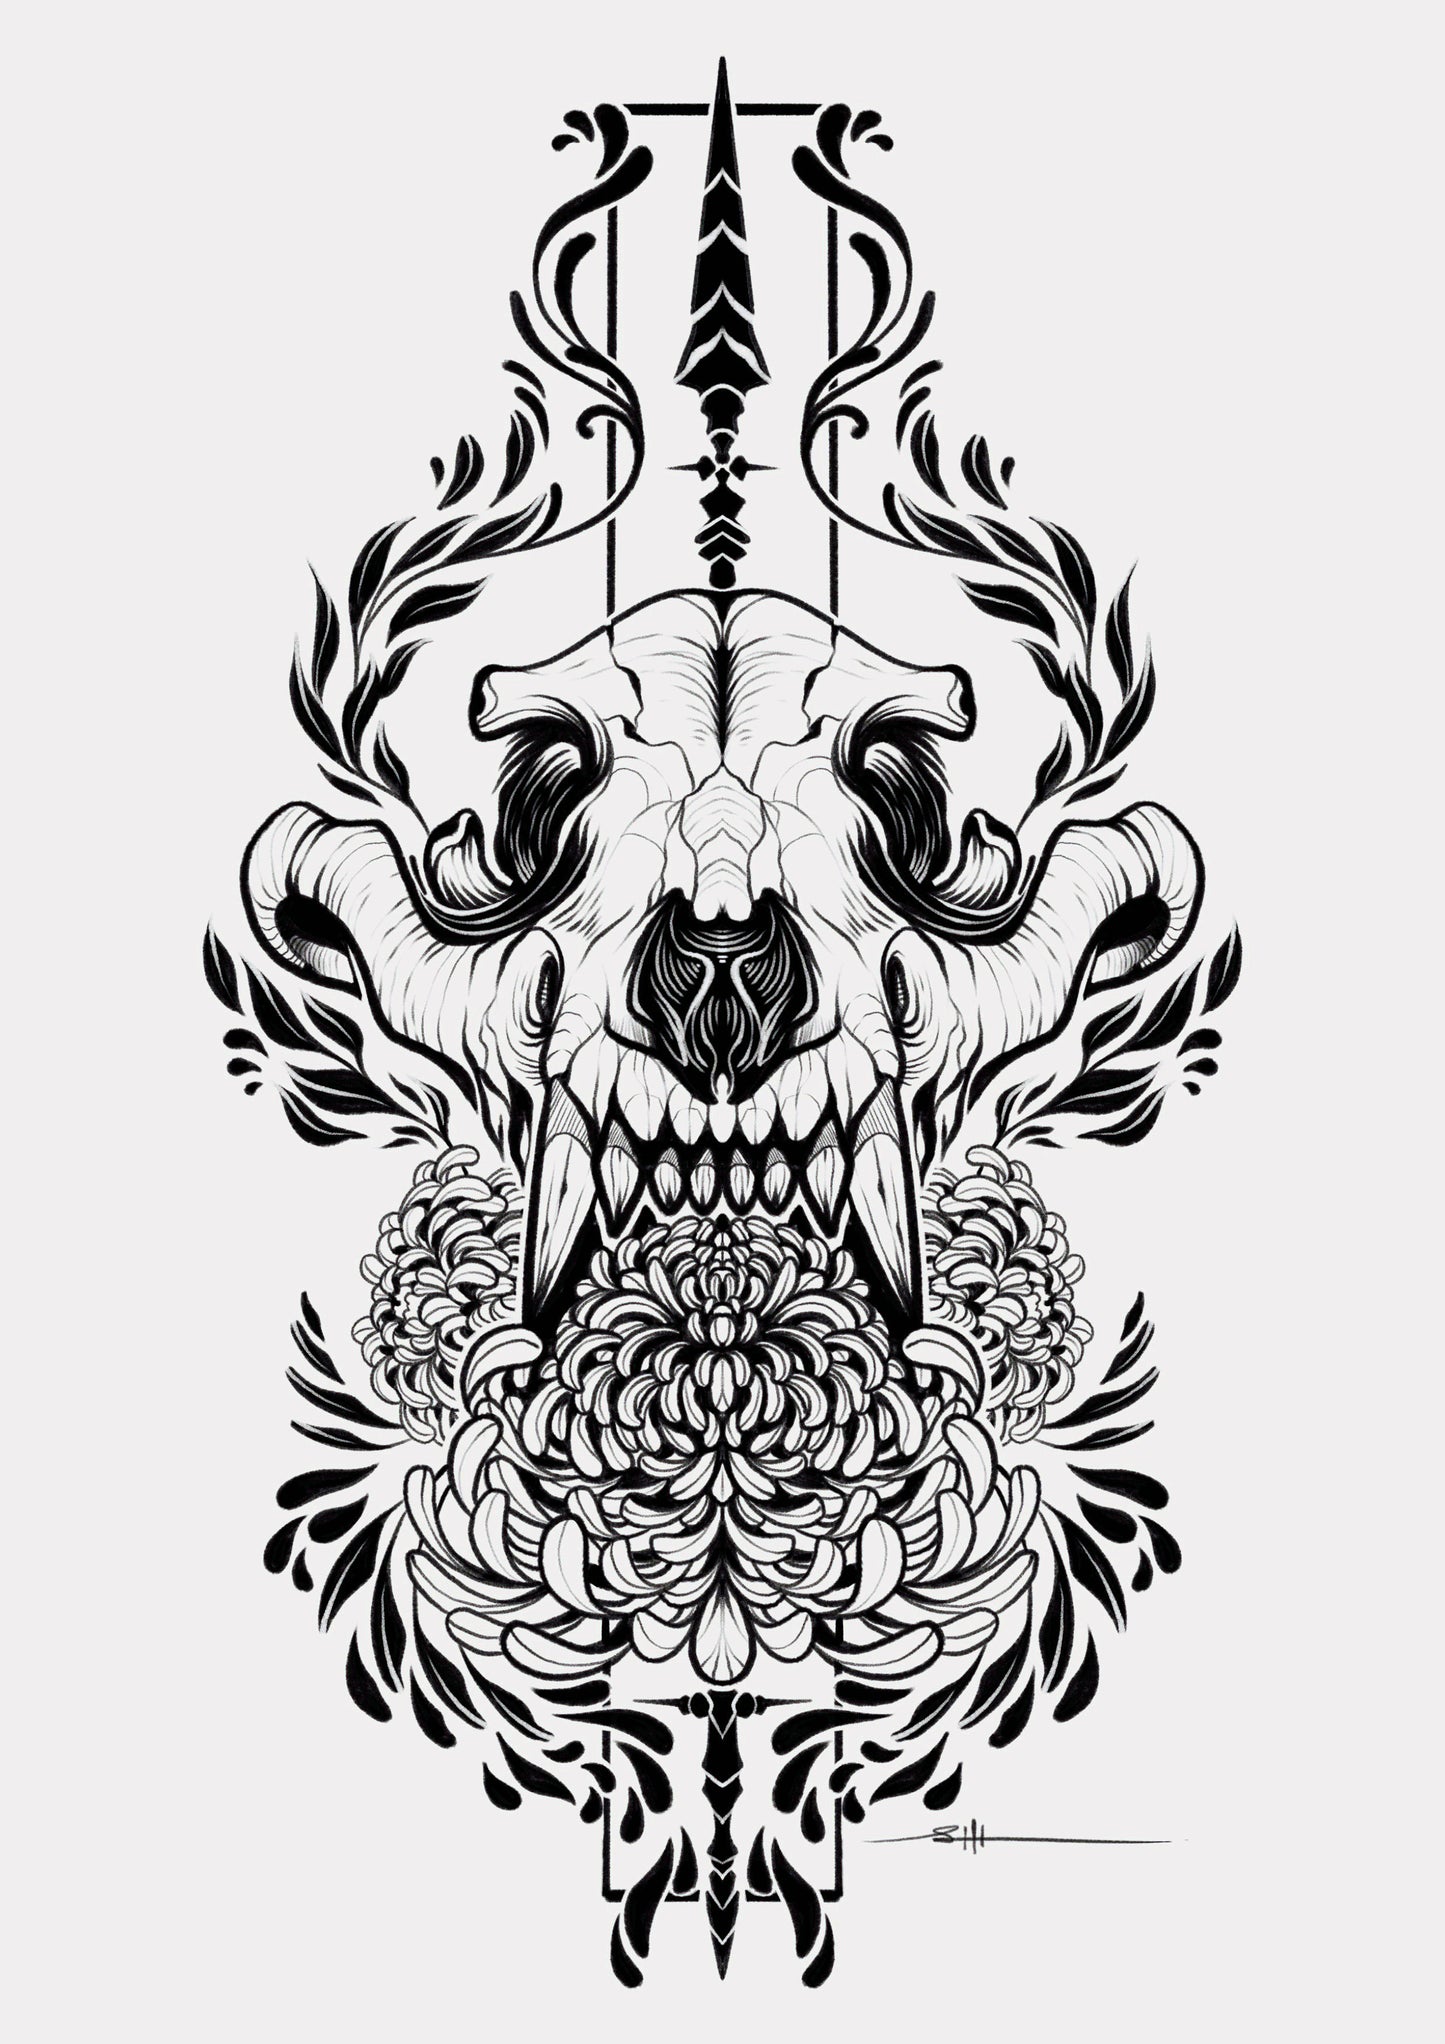 Skull Flower - Digital Print (A4)